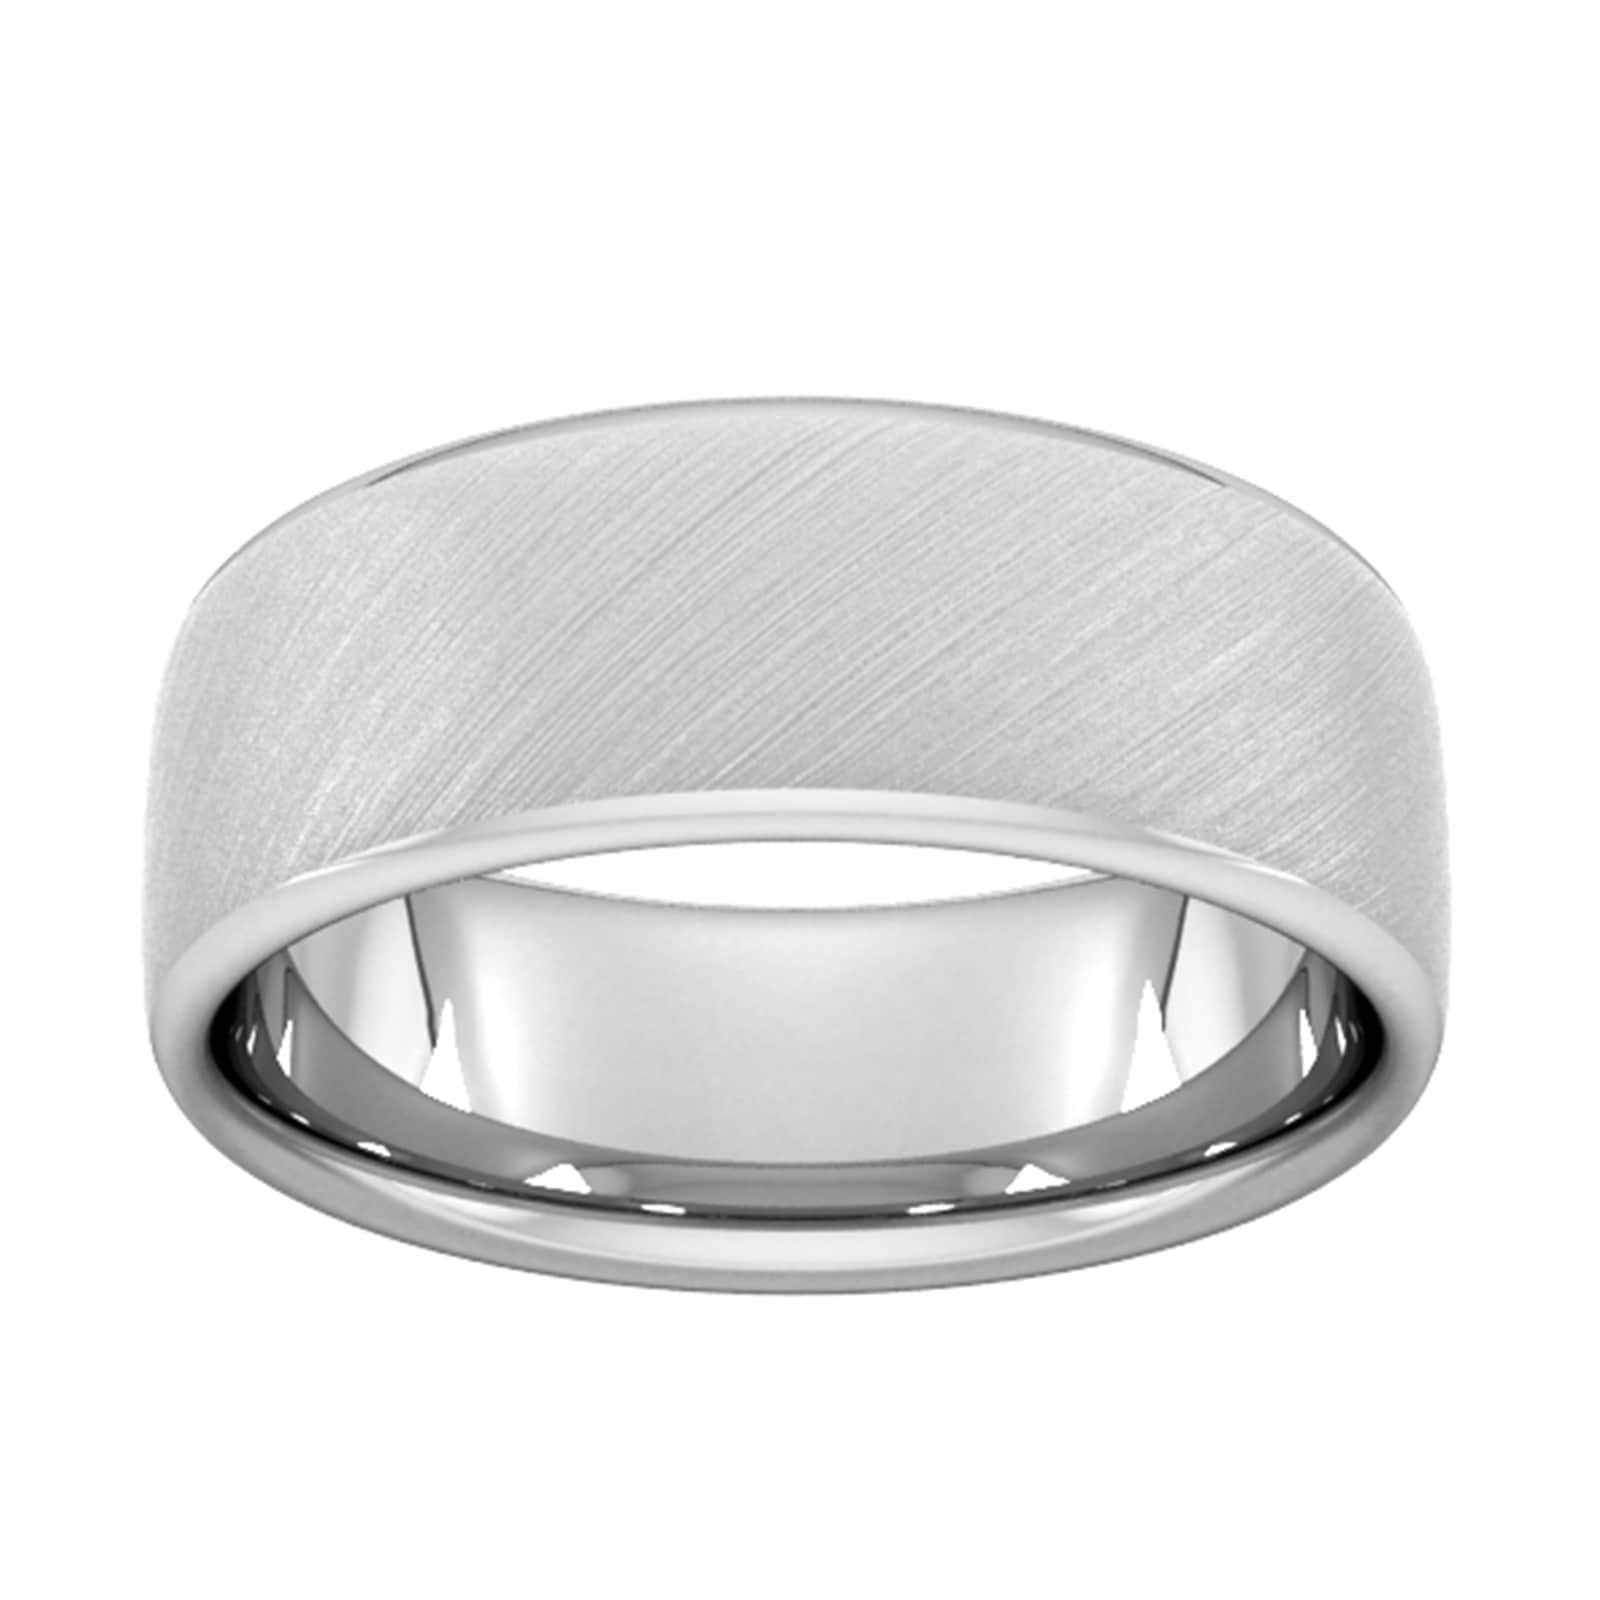 8mm Slight Court Standard Diagonal Matt Finish Wedding Ring In 18 Carat White Gold - Ring Size J